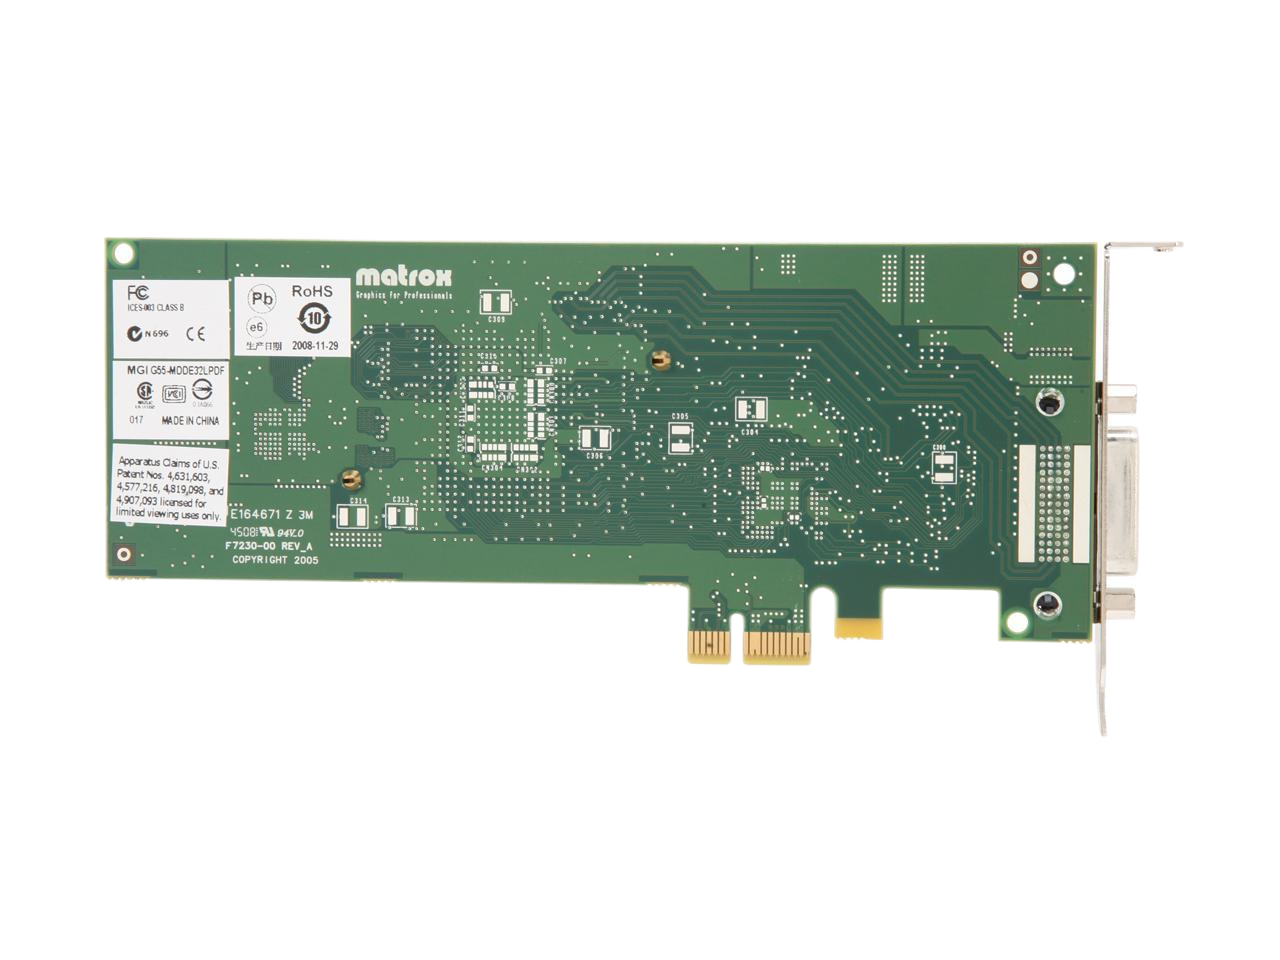 Matrox G550 G55-MDDE32LPDF 32MB PCI Express x1 Low Profile Workstation Video Card